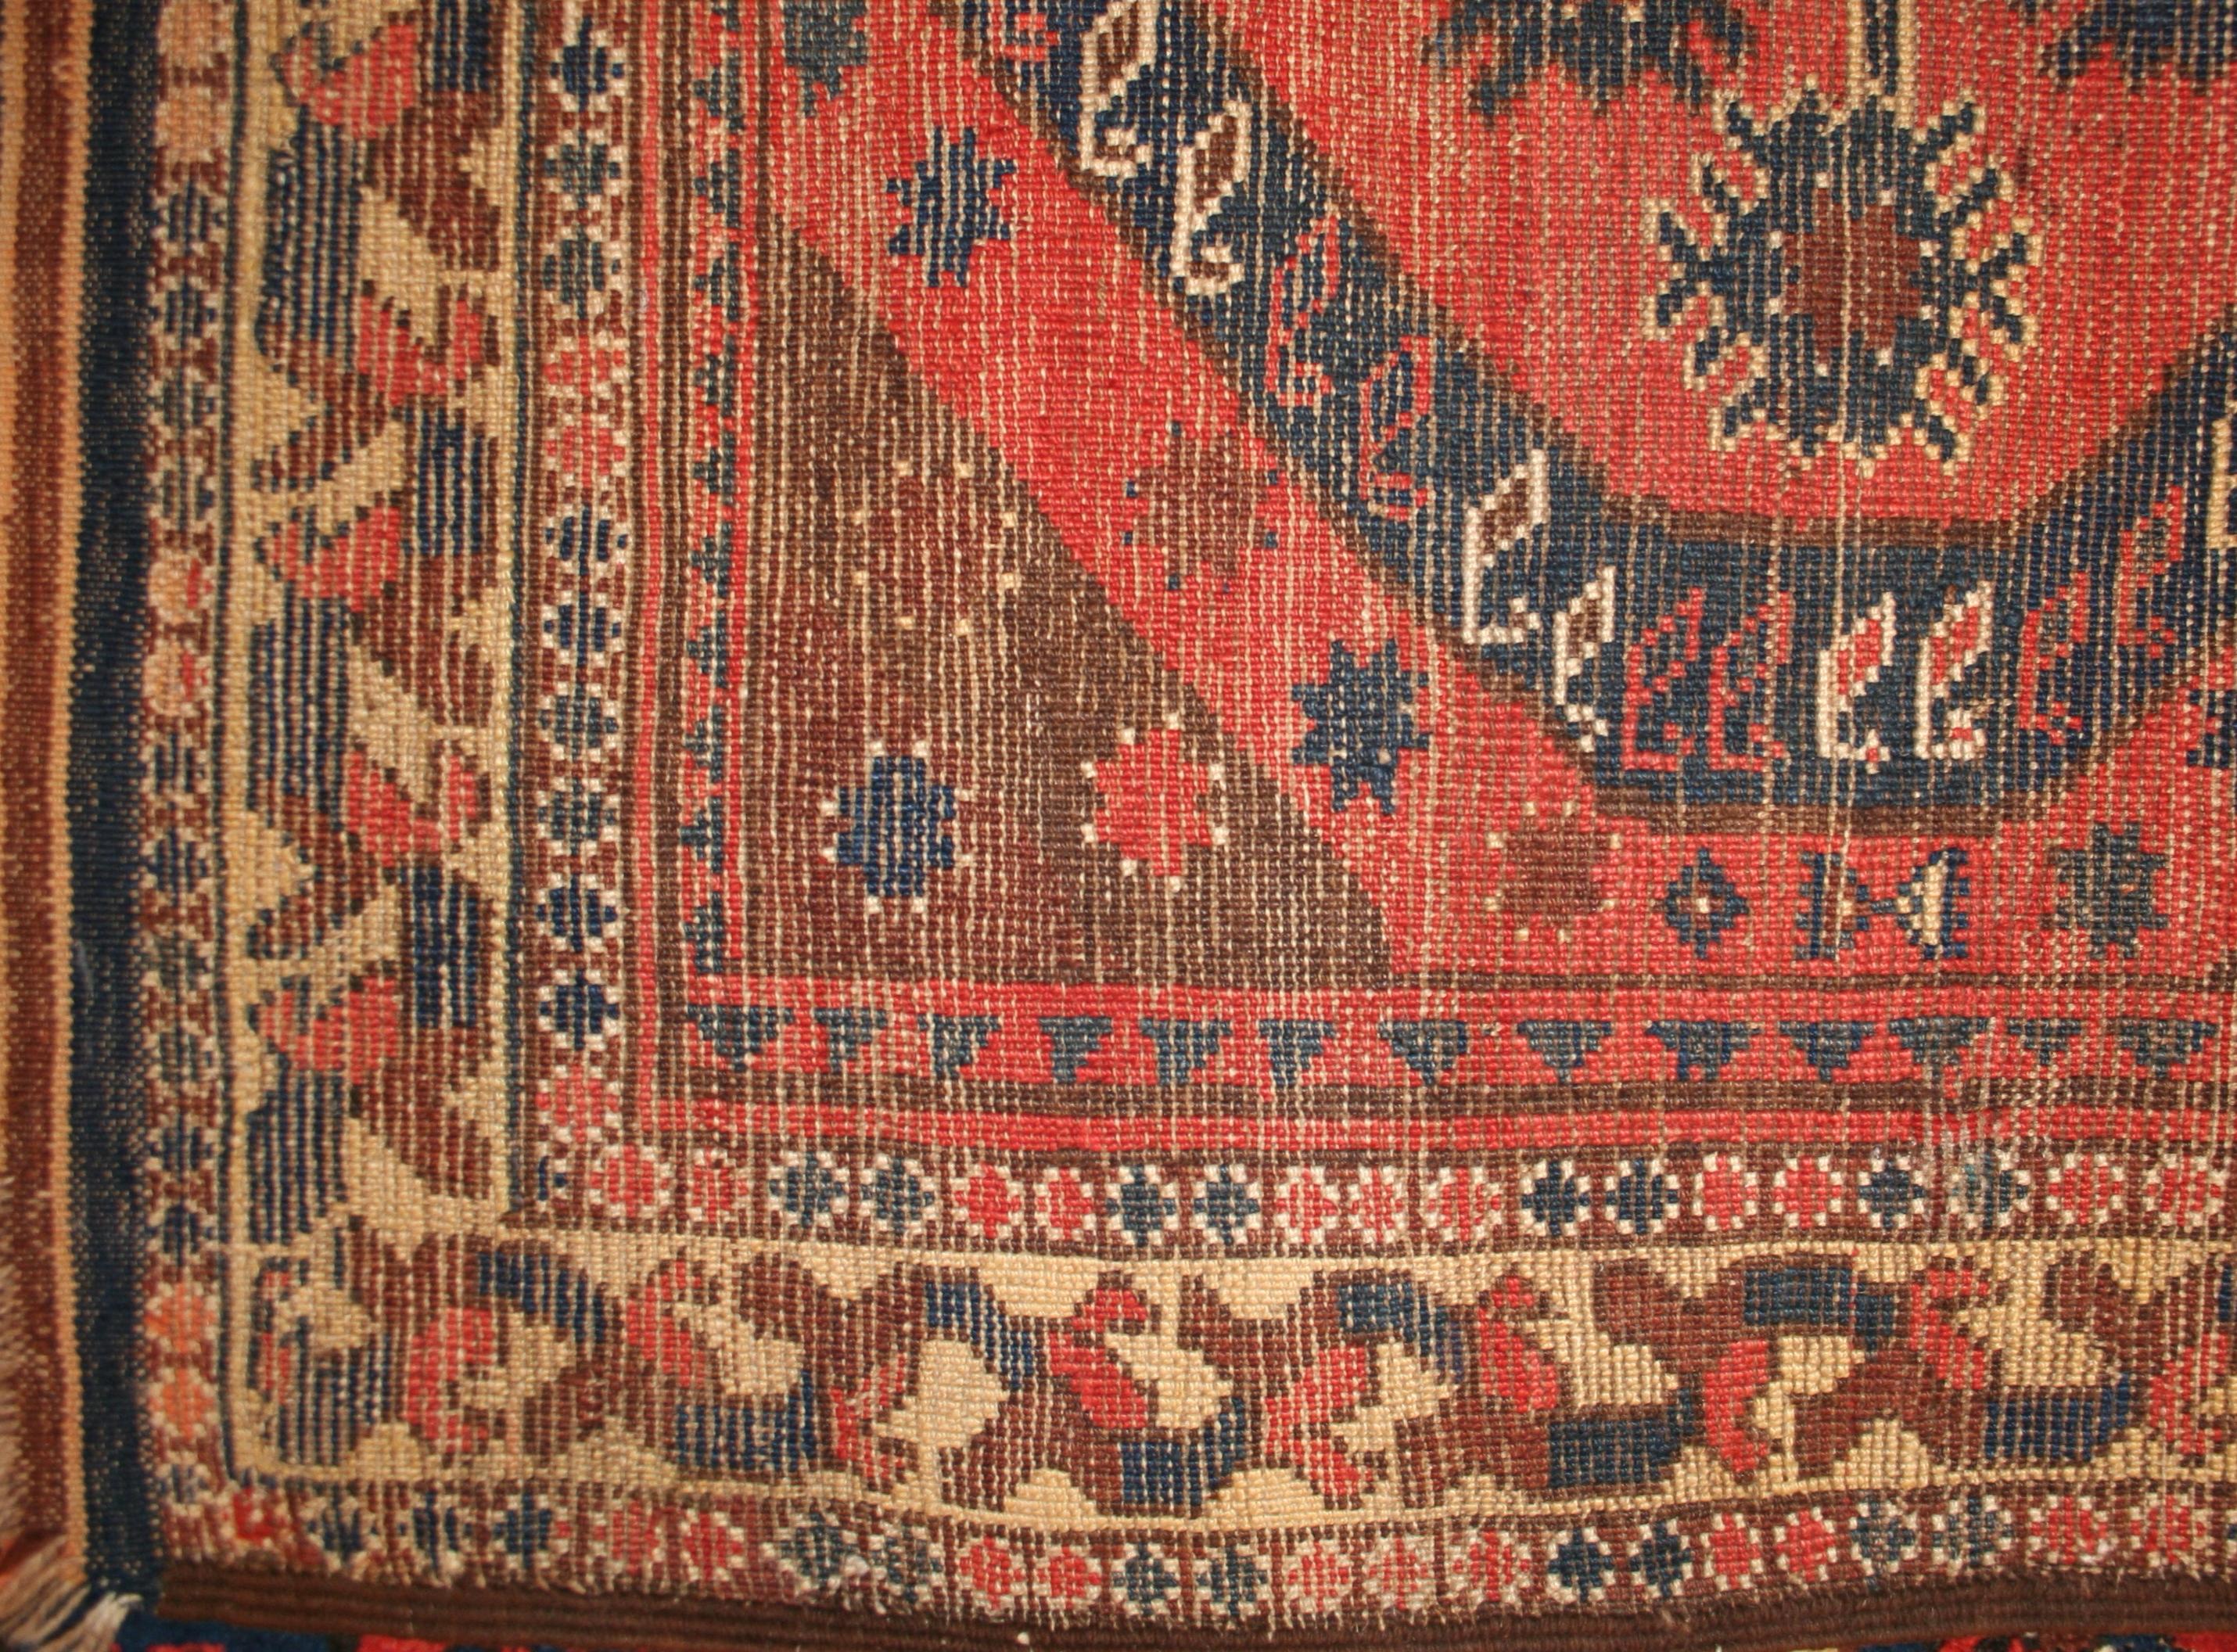 Wool Antique Uzbek Geometric Design Tribal Rug 